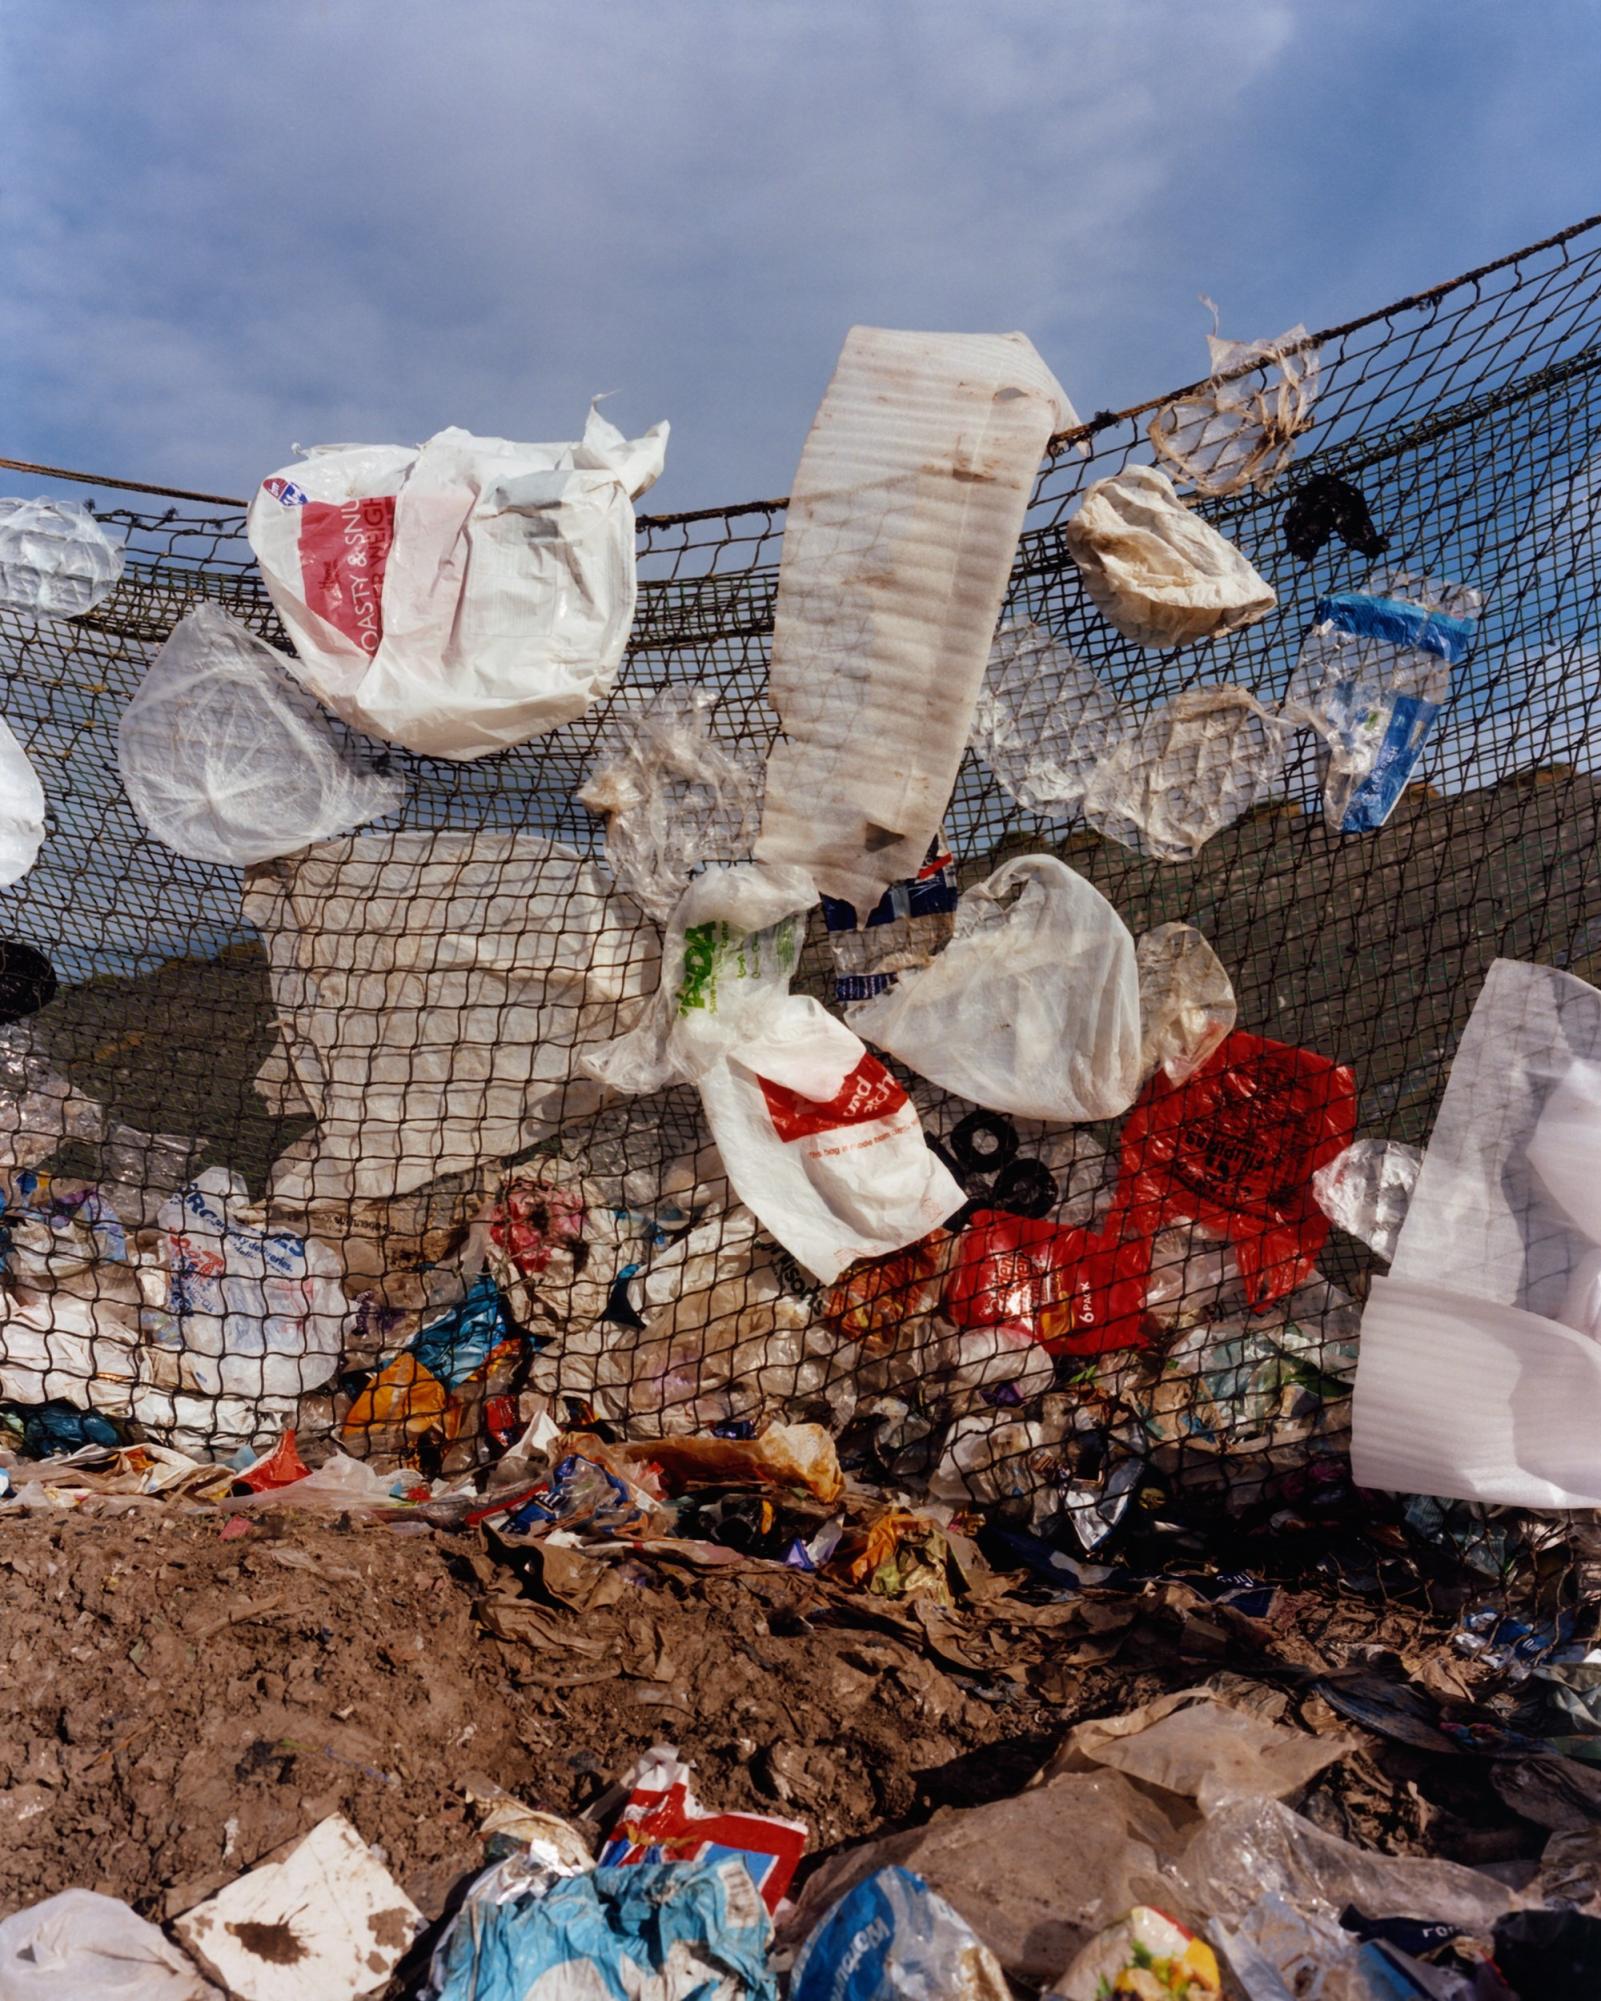 Unrecyclable debris tangled in nets near garbage dumps in London, England.